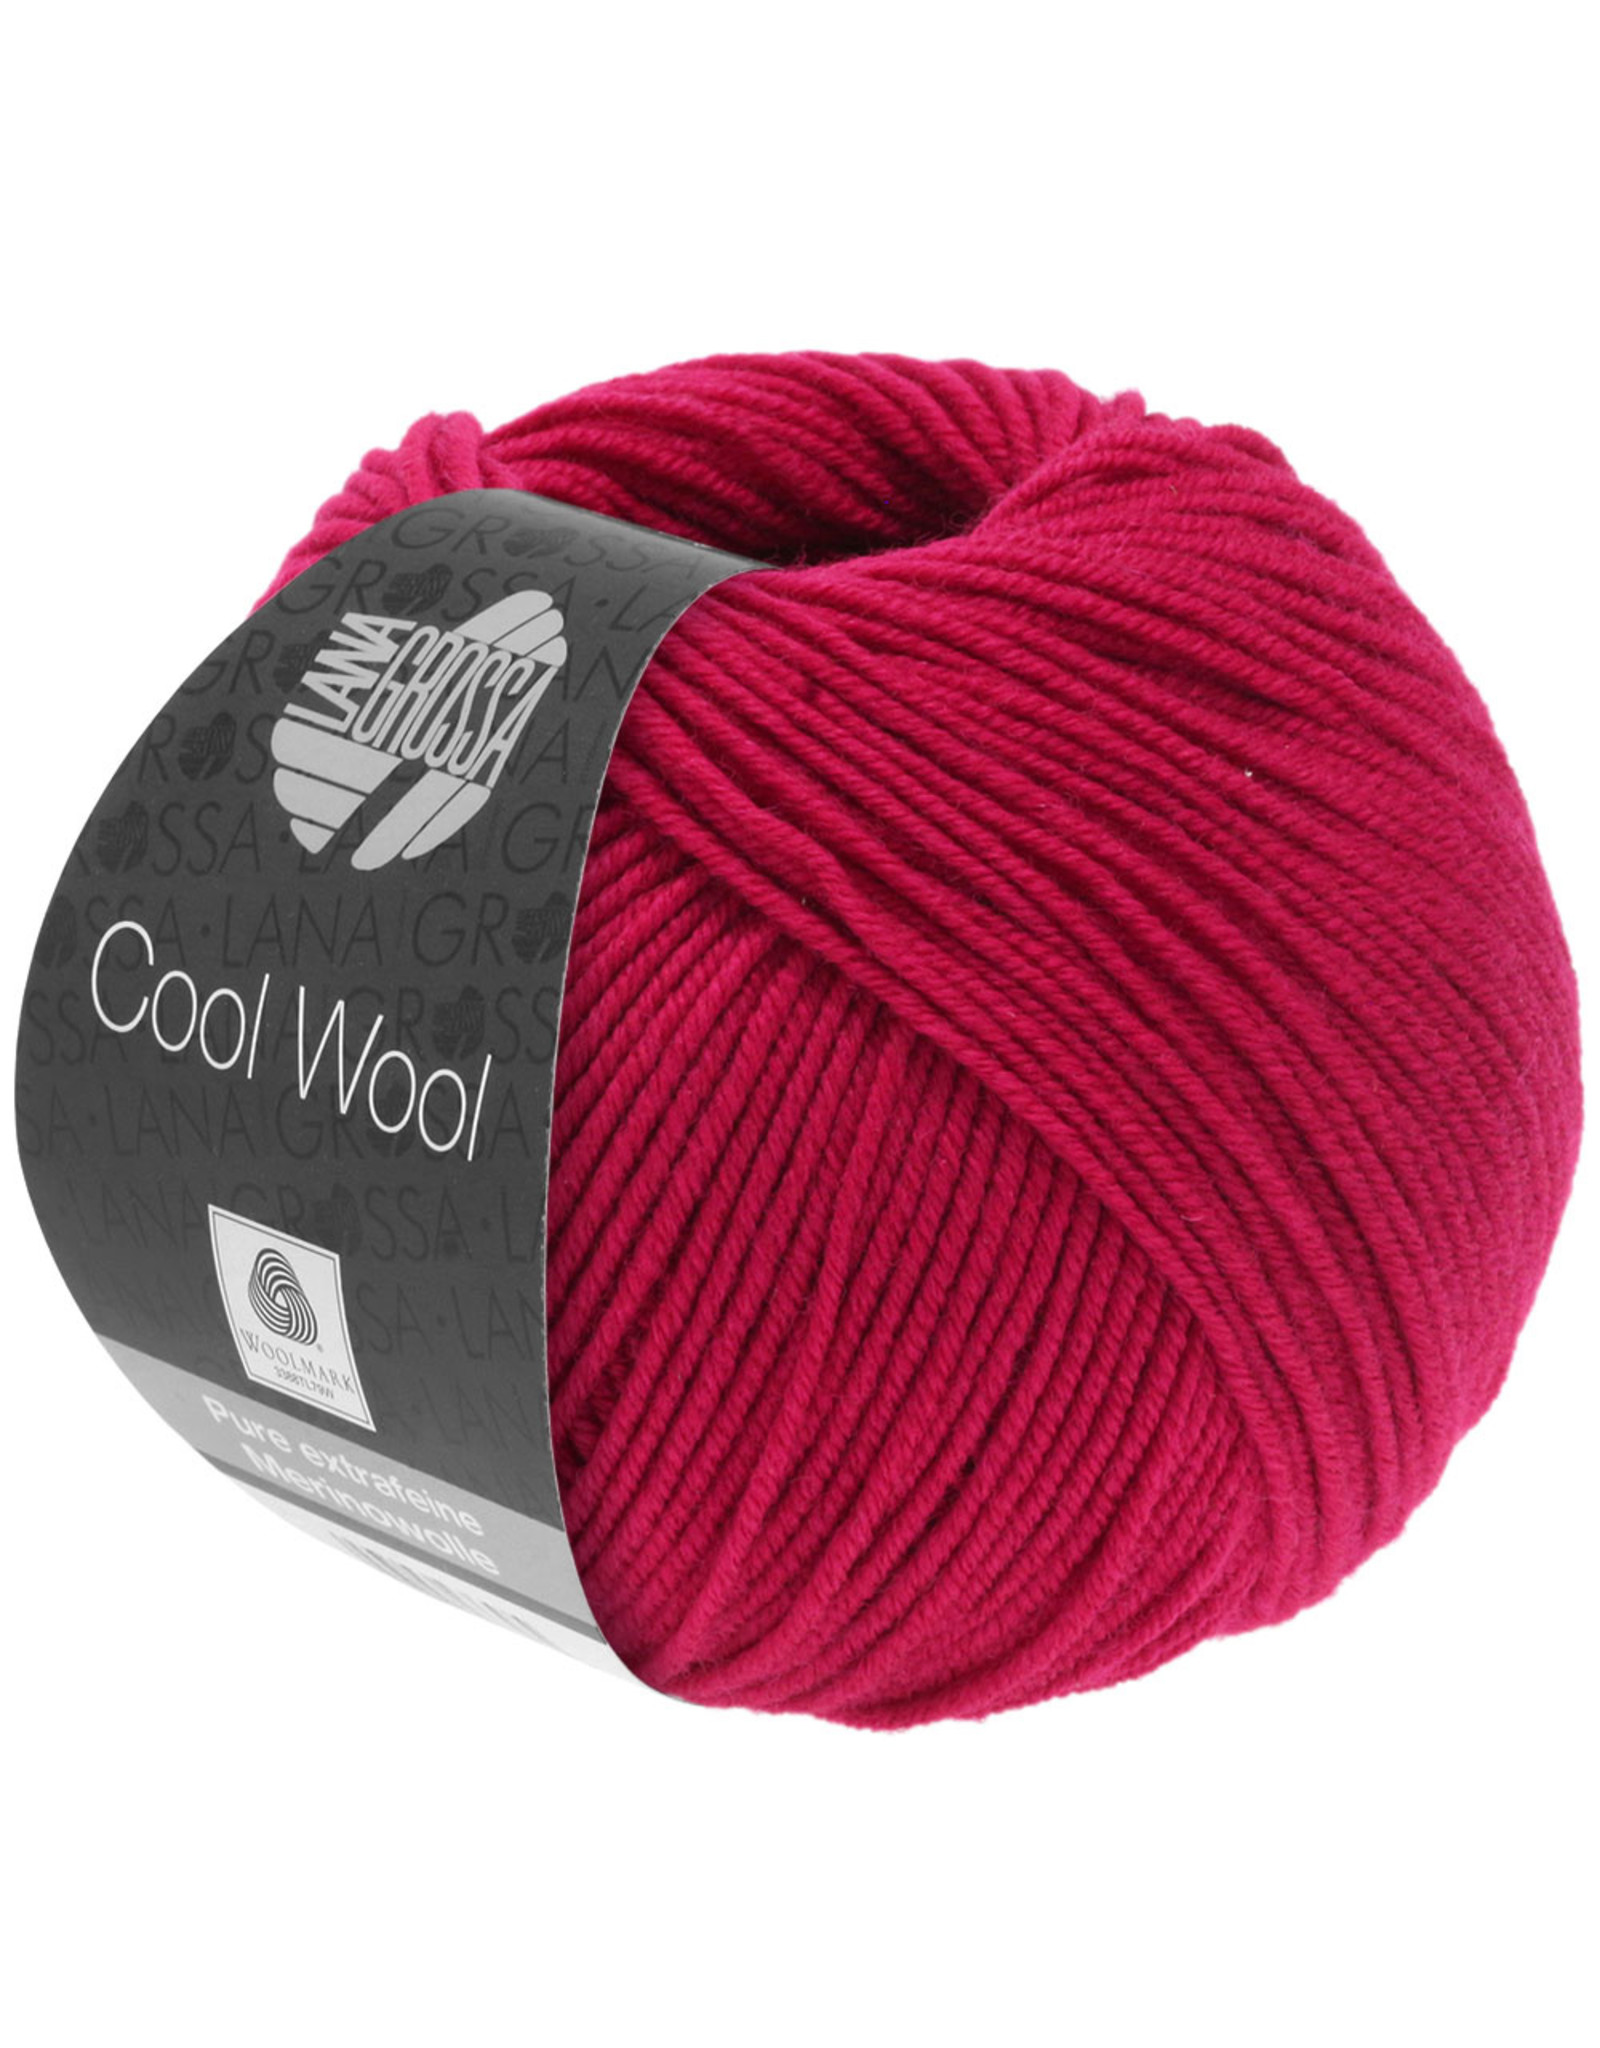 Lana Grossa Lana Grossa Cool wool 2067